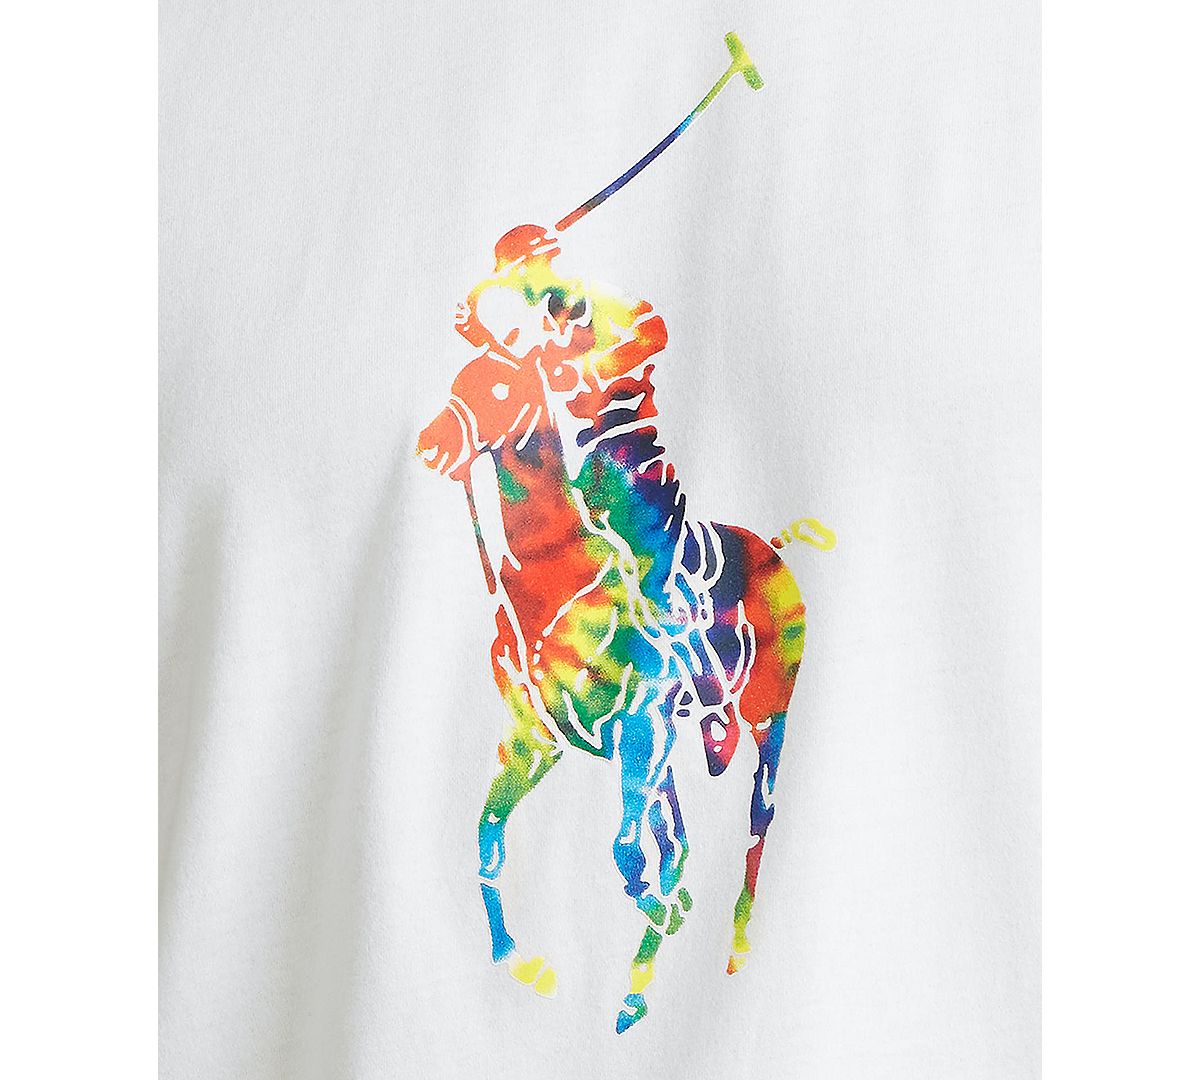 Polo Ralph Lauren Tie-dye Big Pony Logo Lightweight Sleep Shirt White